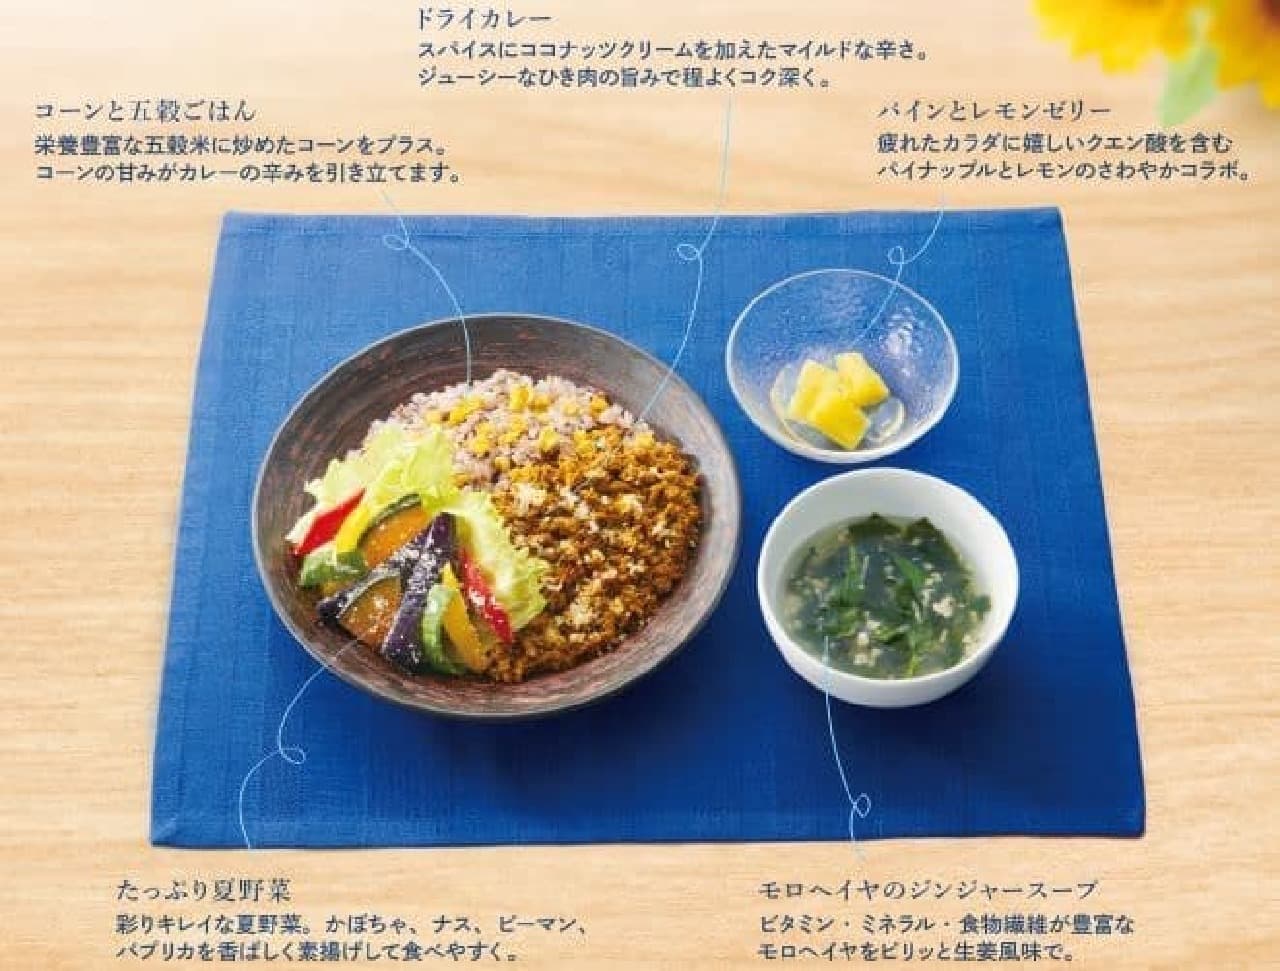 Ootoya "Summer Dry Curry"